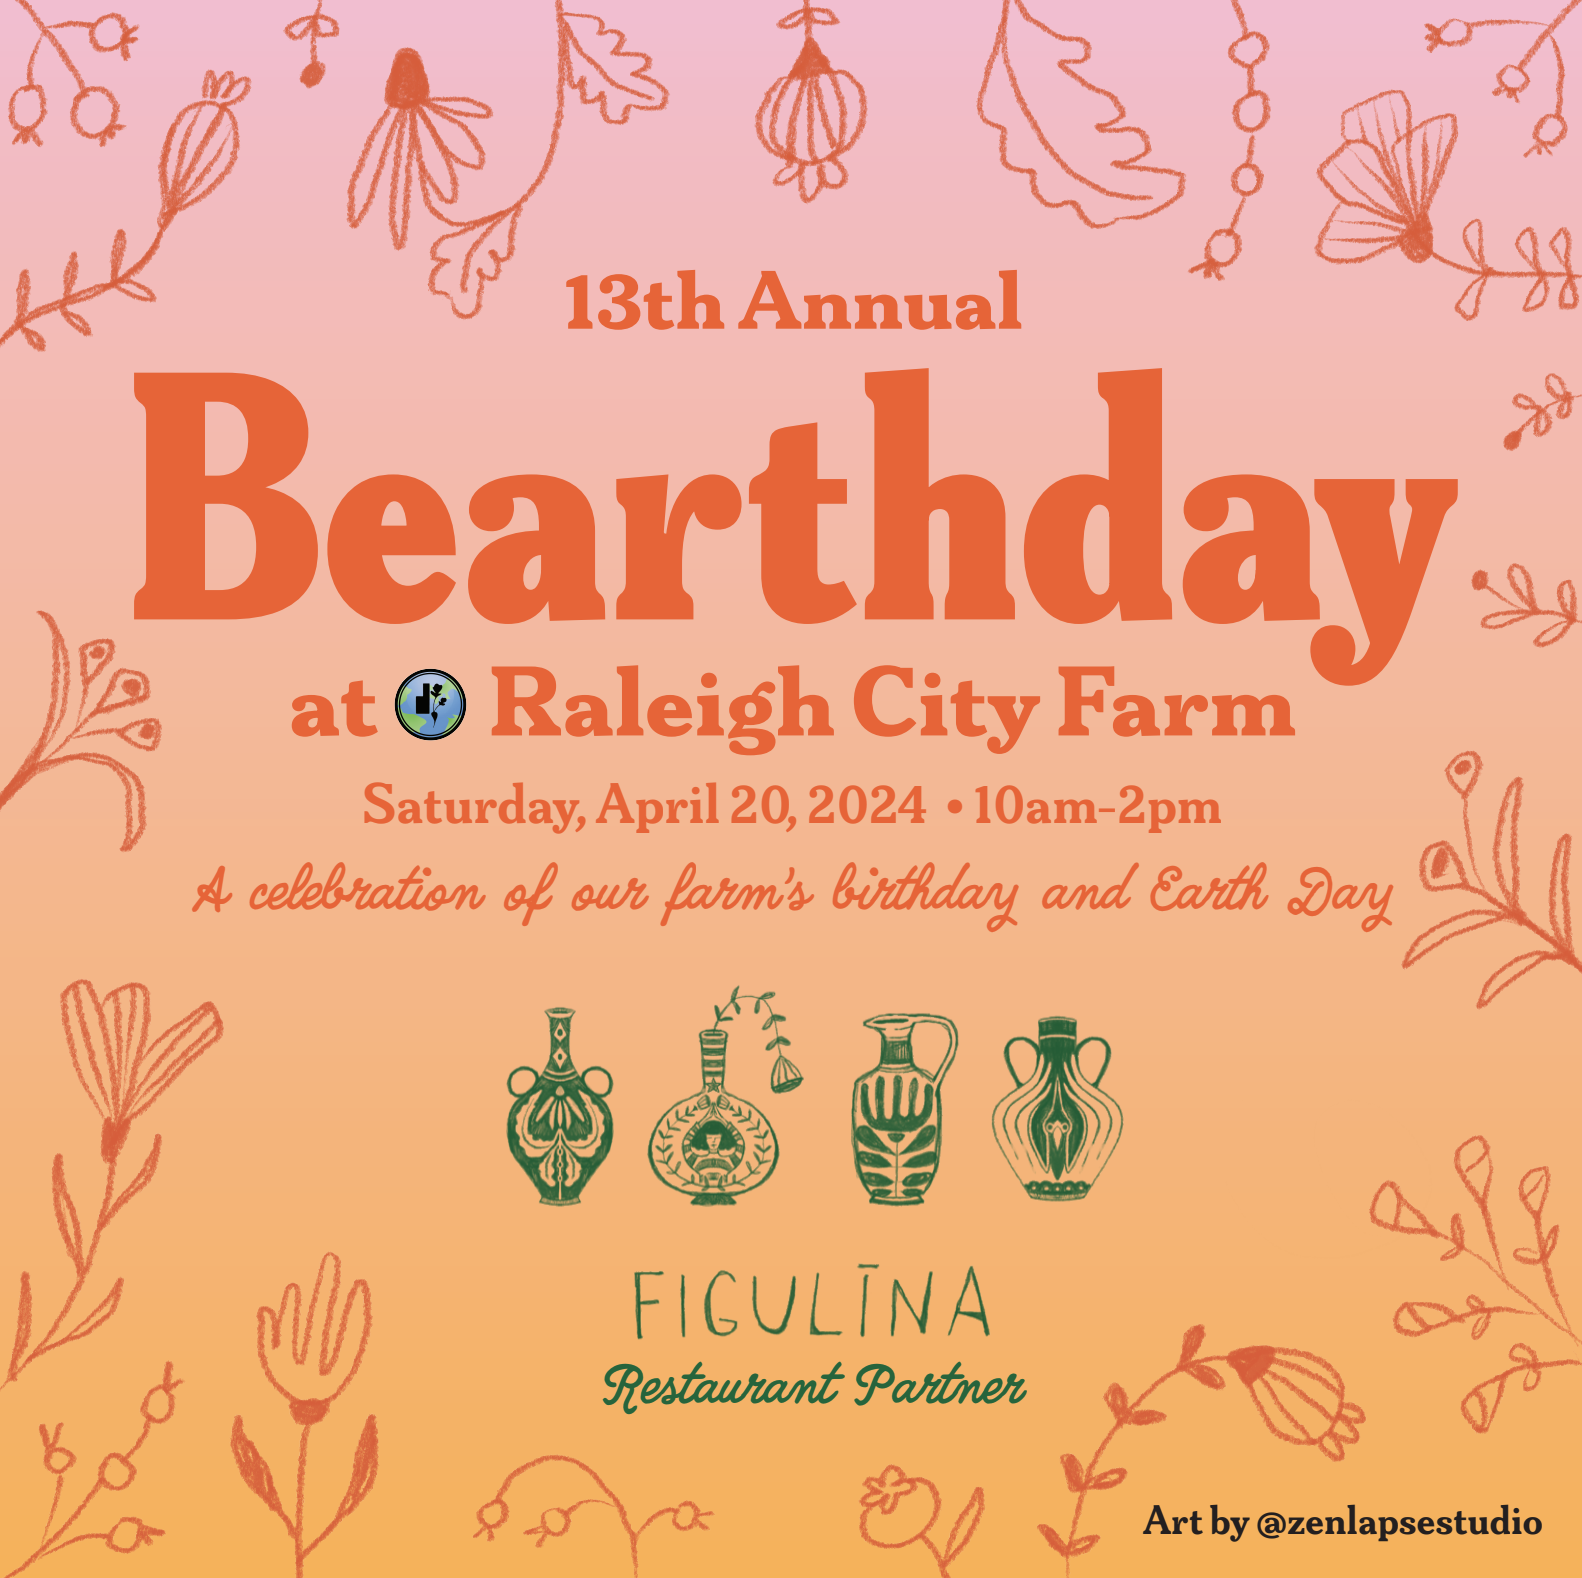 Bearthday Flyer for the bearthday event for Raleigh City Farm